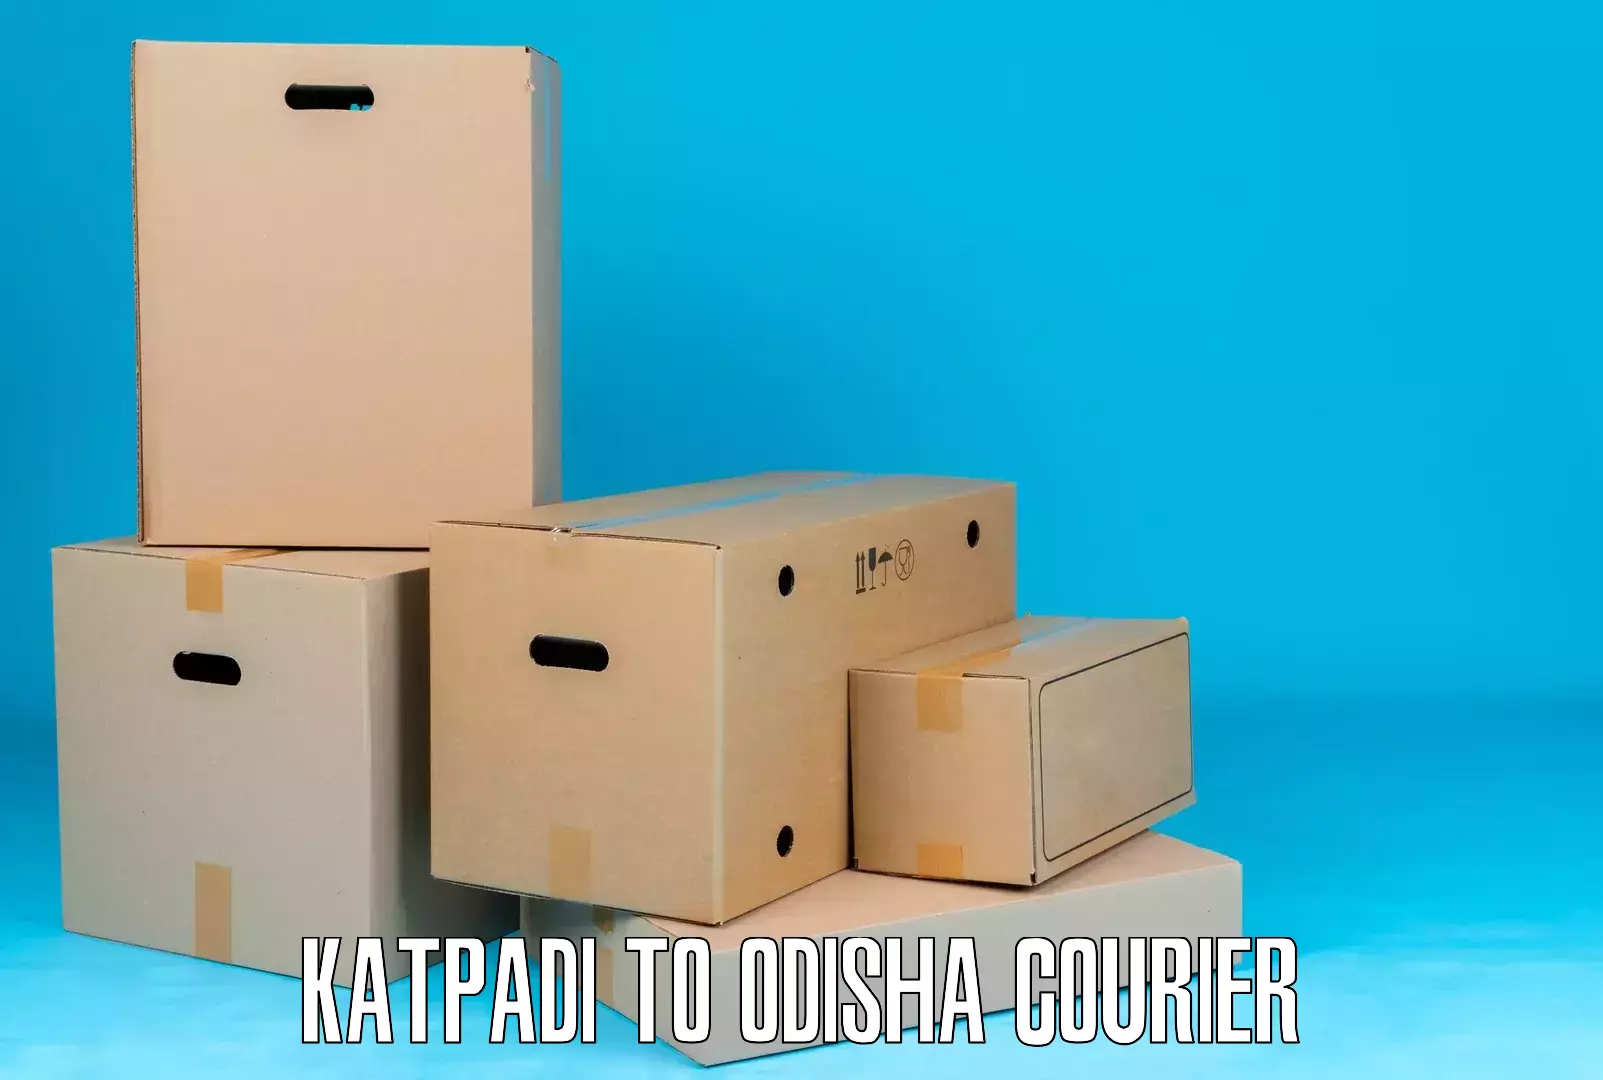 Parcel delivery automation Katpadi to Odisha